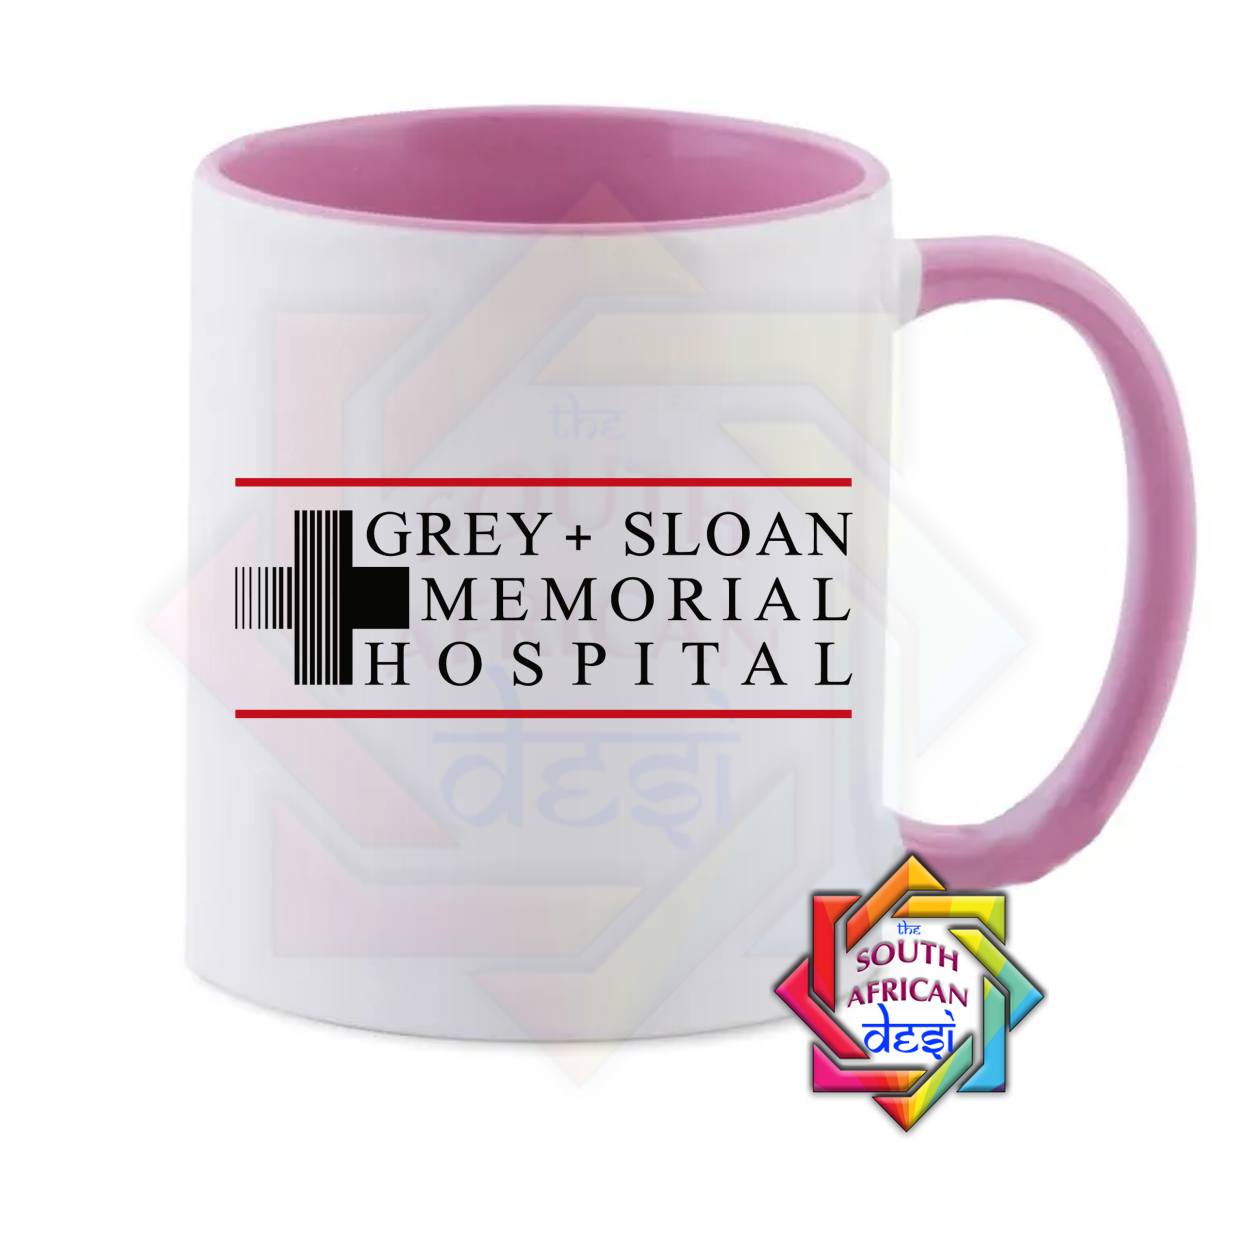 GREY SLOAN MEMORIAL HOSPITAL | GREYS ANATOMY INSPIRED MUG